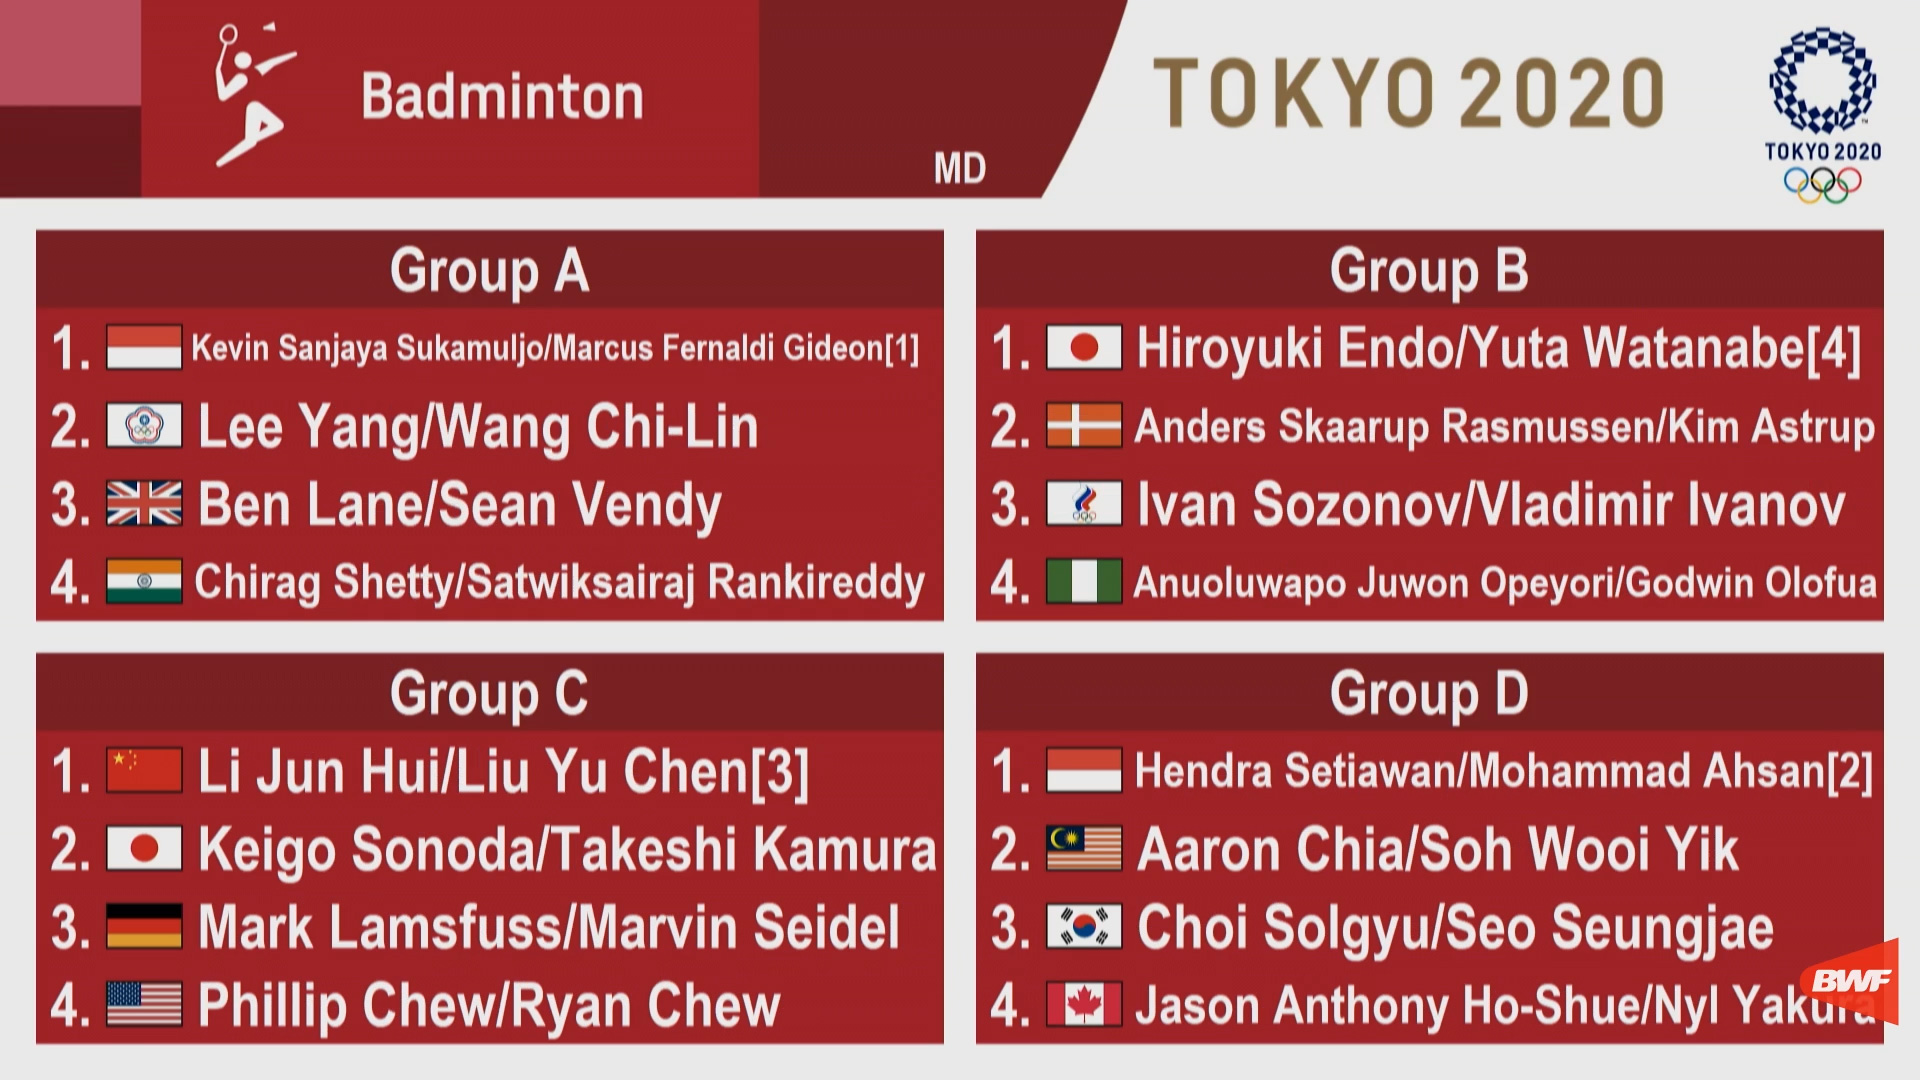 Olympic games tokyo 2020 badminton